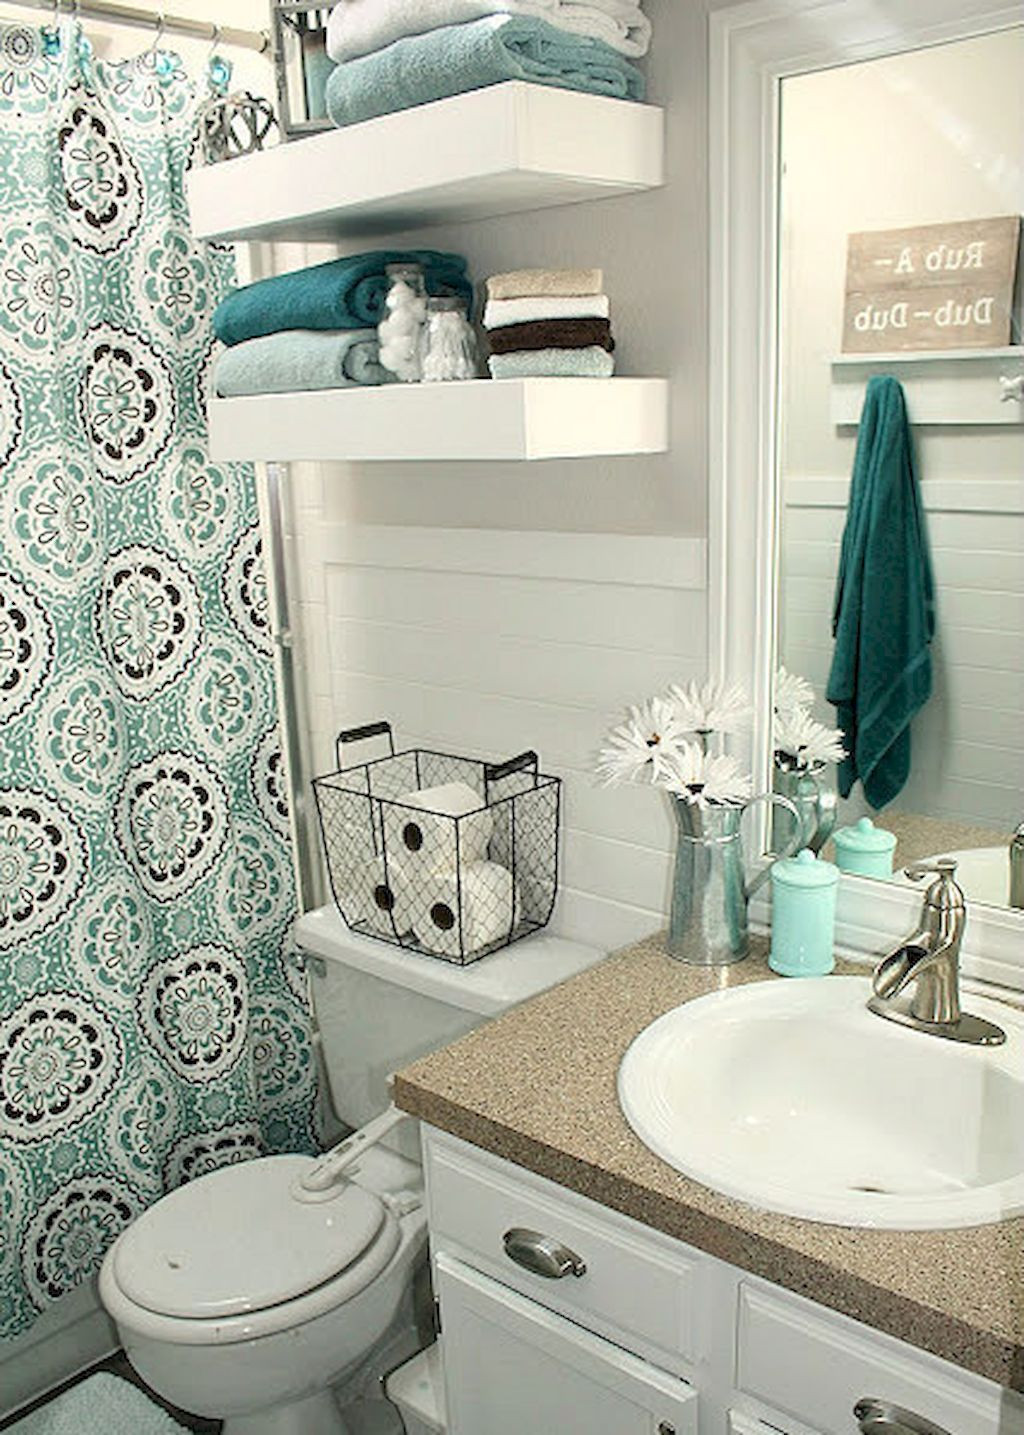 DIY Bathroom Decor Pinterest
 Adorable 30 DIY Small Apartment Decorating Ideas on a